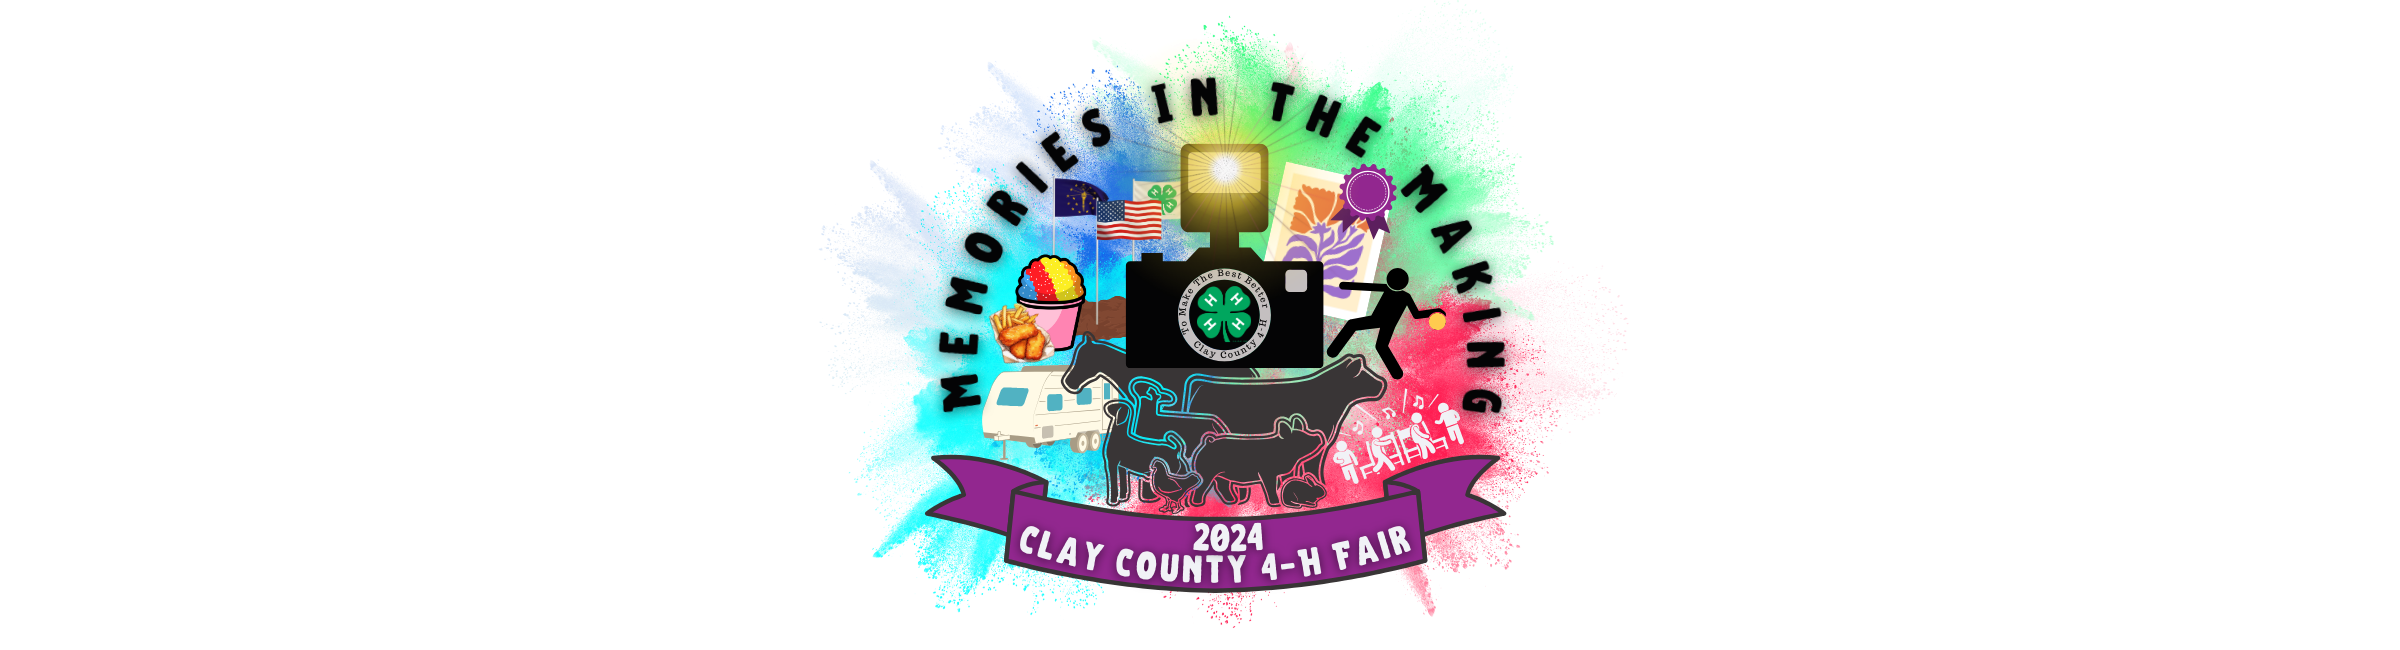 2024 Clay County 4-H Fair